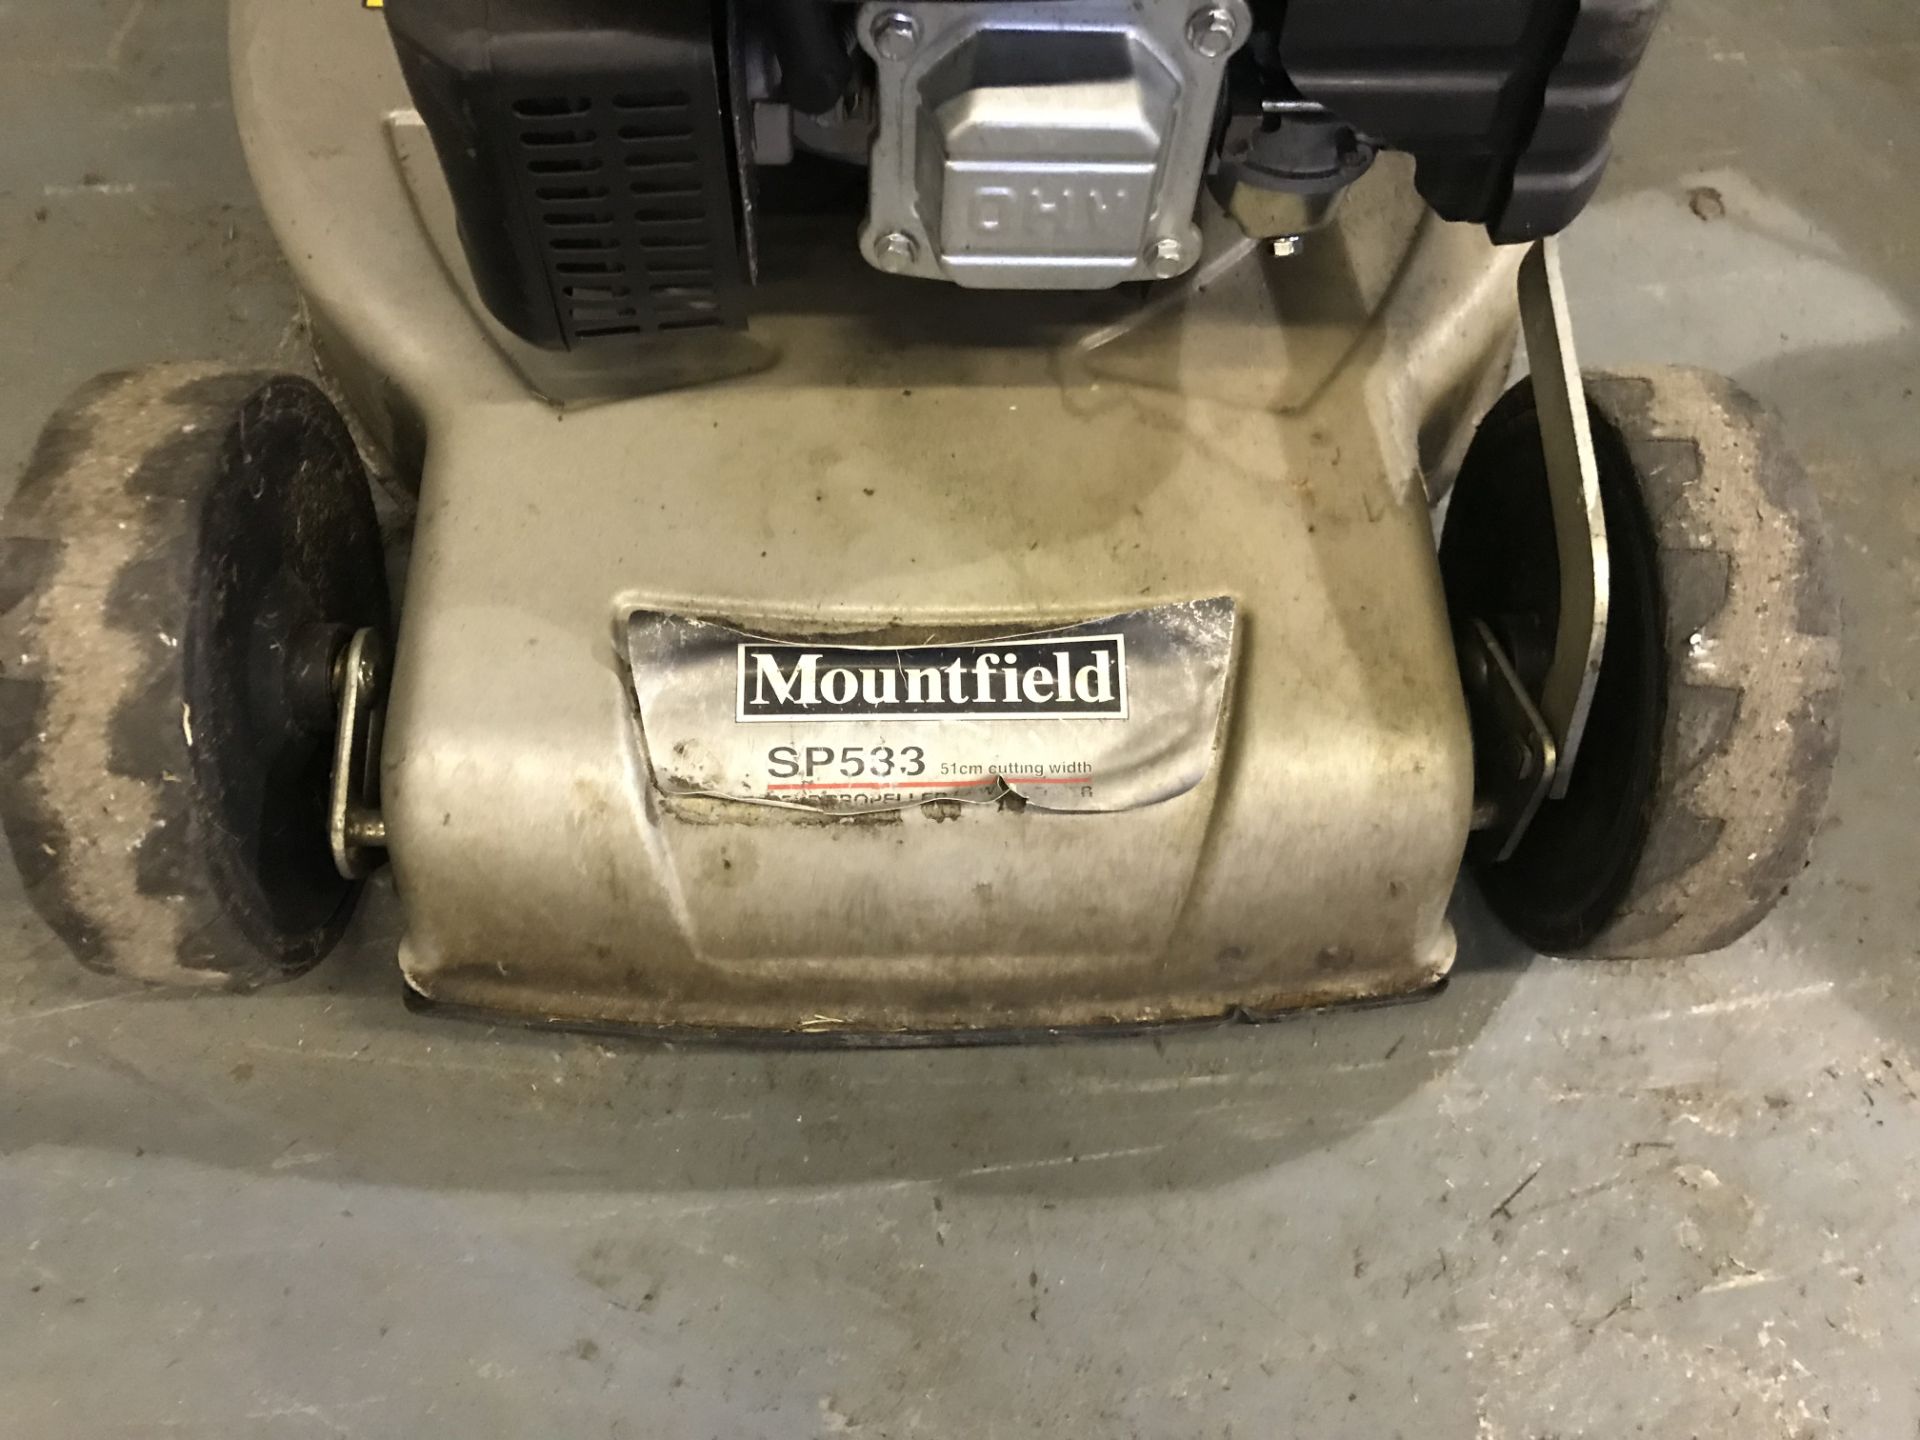 Mountfield SP533 51cm Self-Propelled Petrol Lawn Mower | 2013 - Image 3 of 5